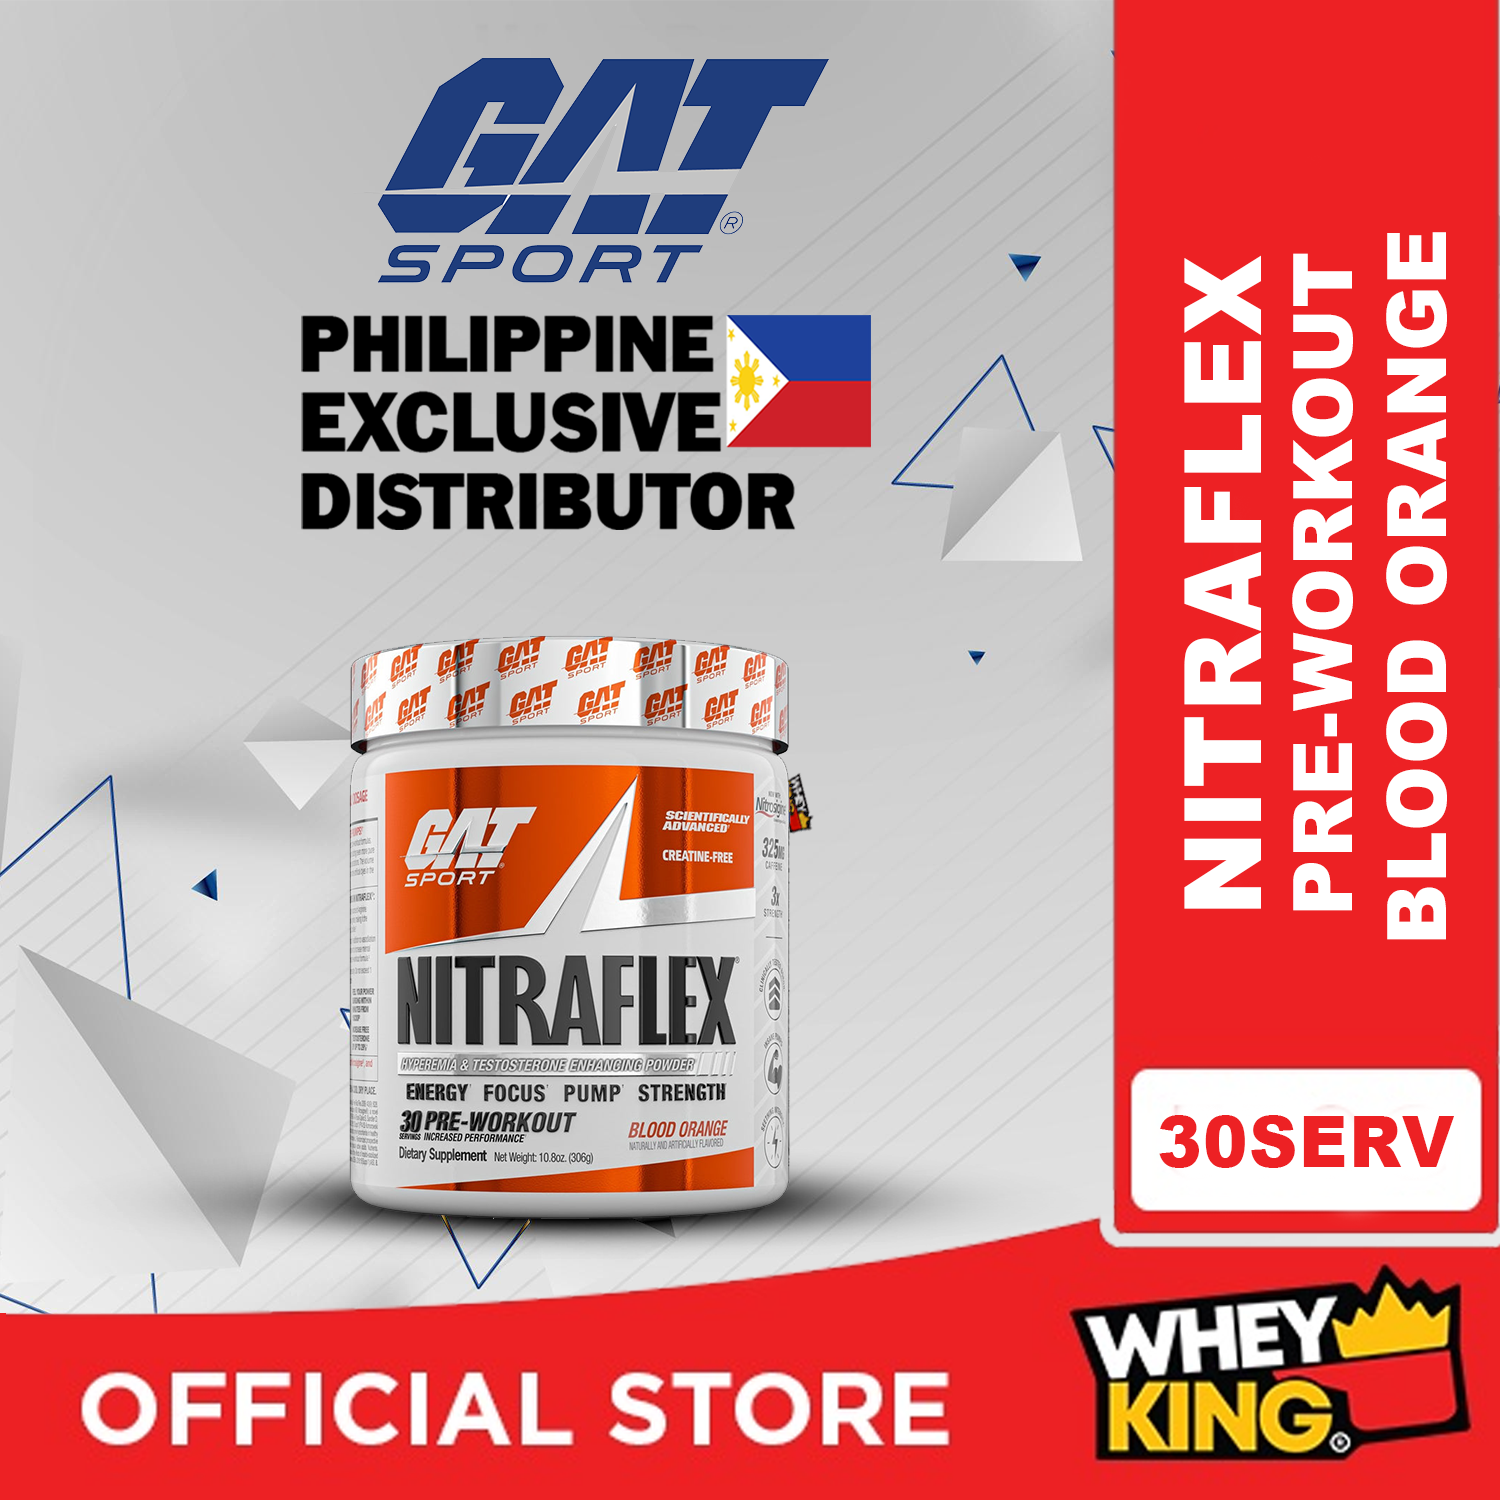 GAT Sport Nitraflex Hyperemia & Testosterone Enhancing  Powder - 30 Servings